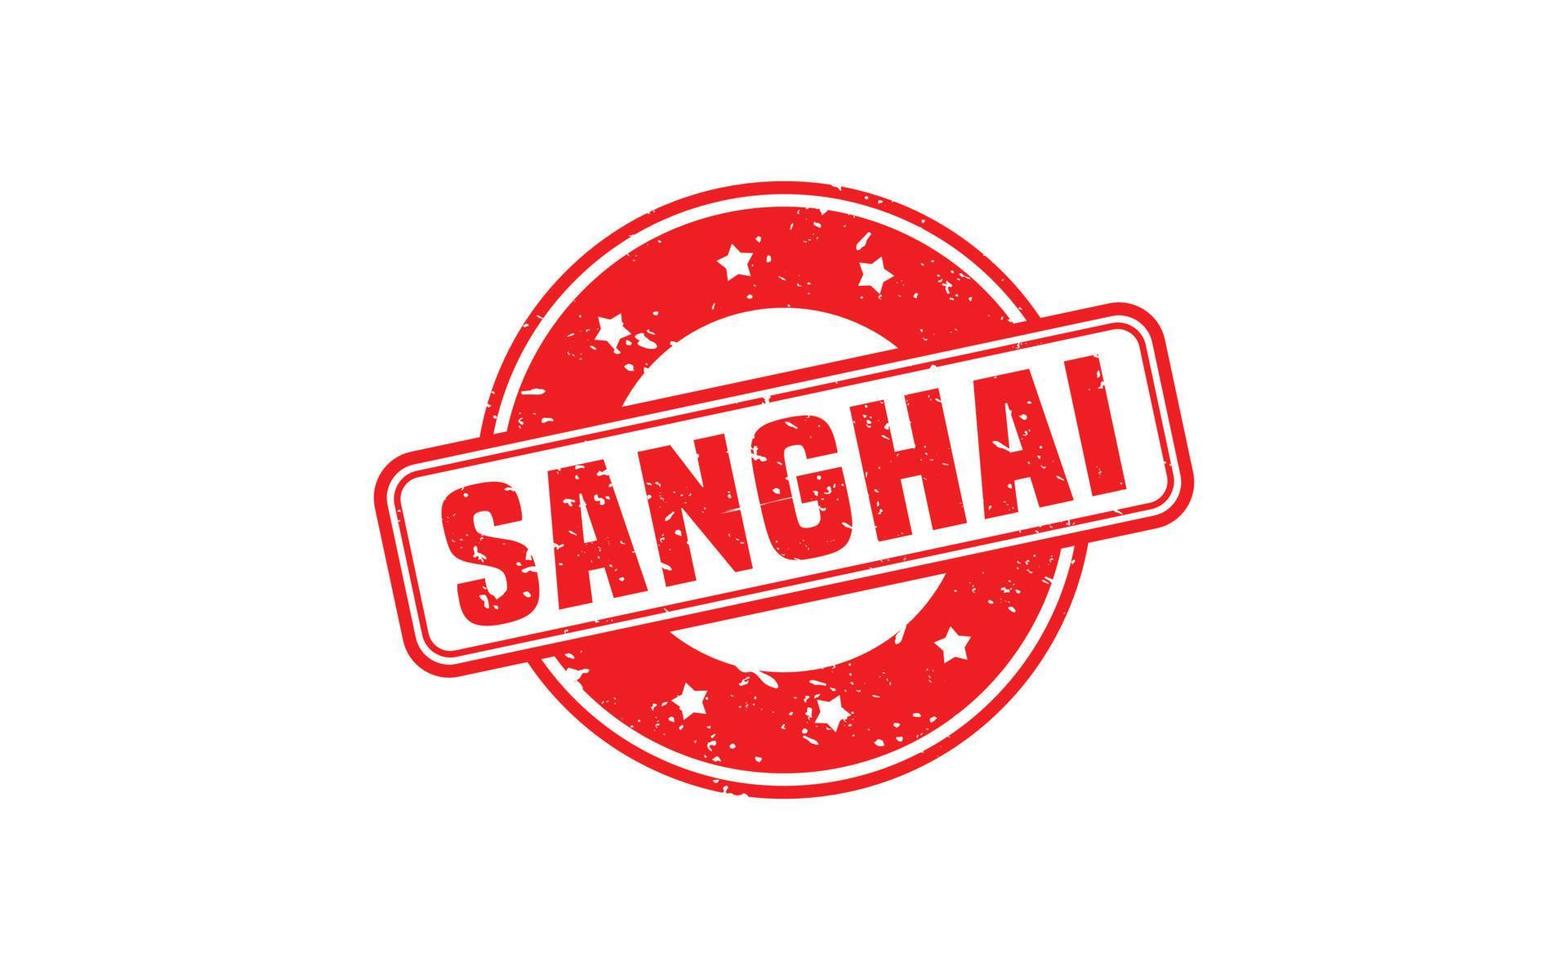 borracha de carimbo sanghai china com estilo grunge em fundo branco vetor